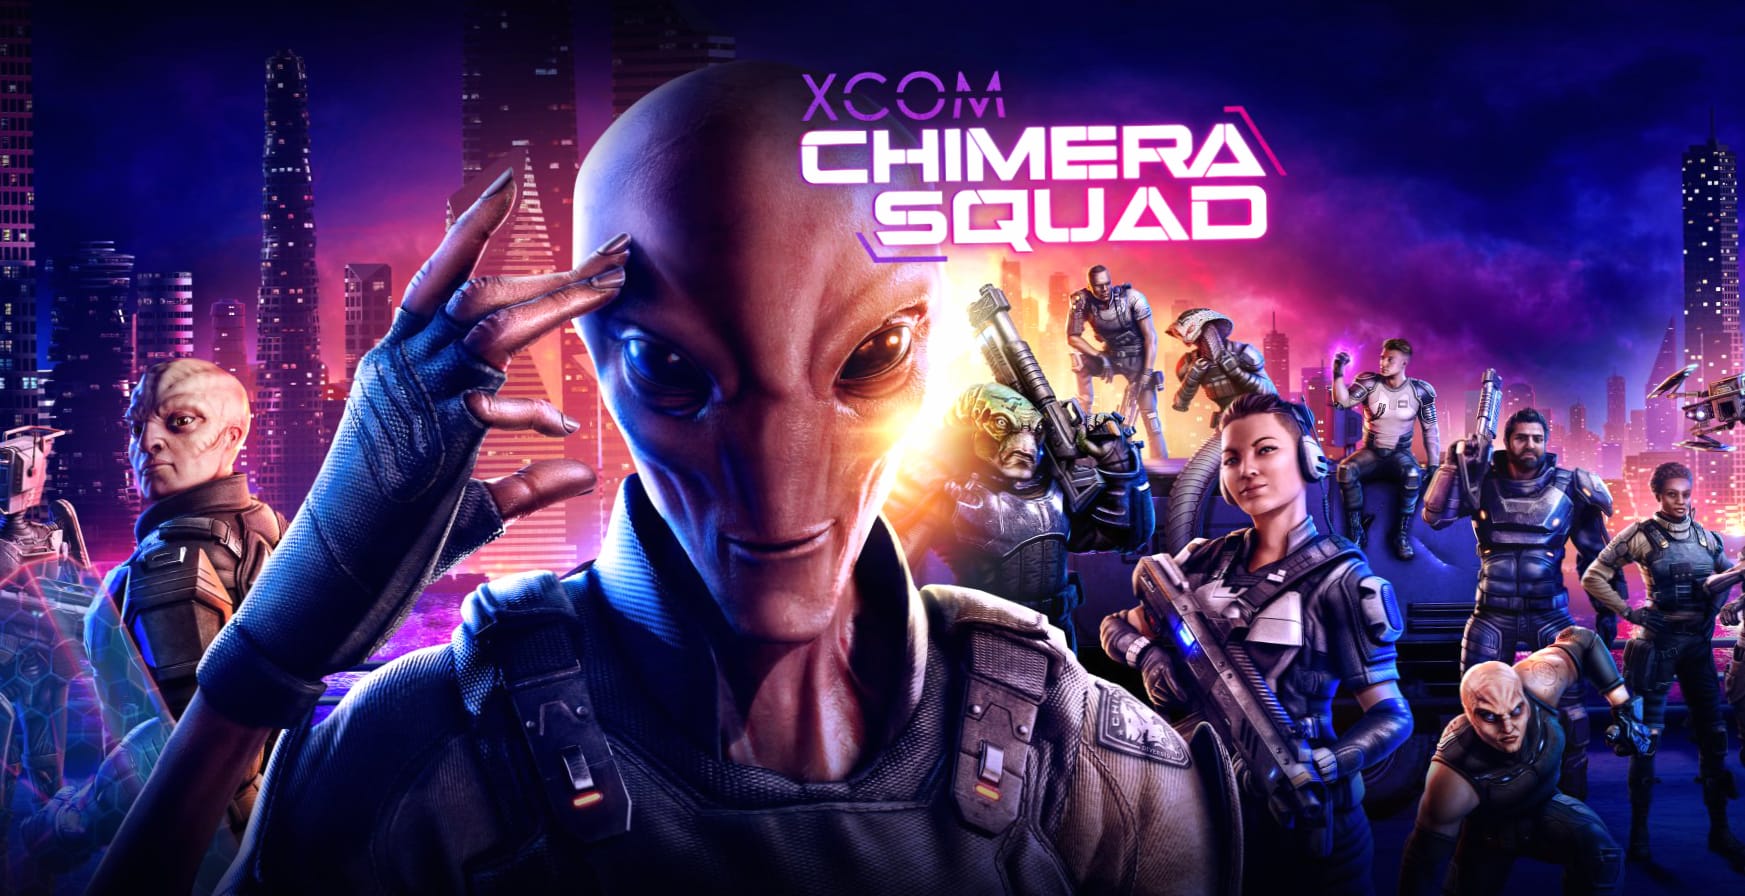 XCOM Chimera Squad at 750 x 1334 iPhone 6 size wallpapers HD quality